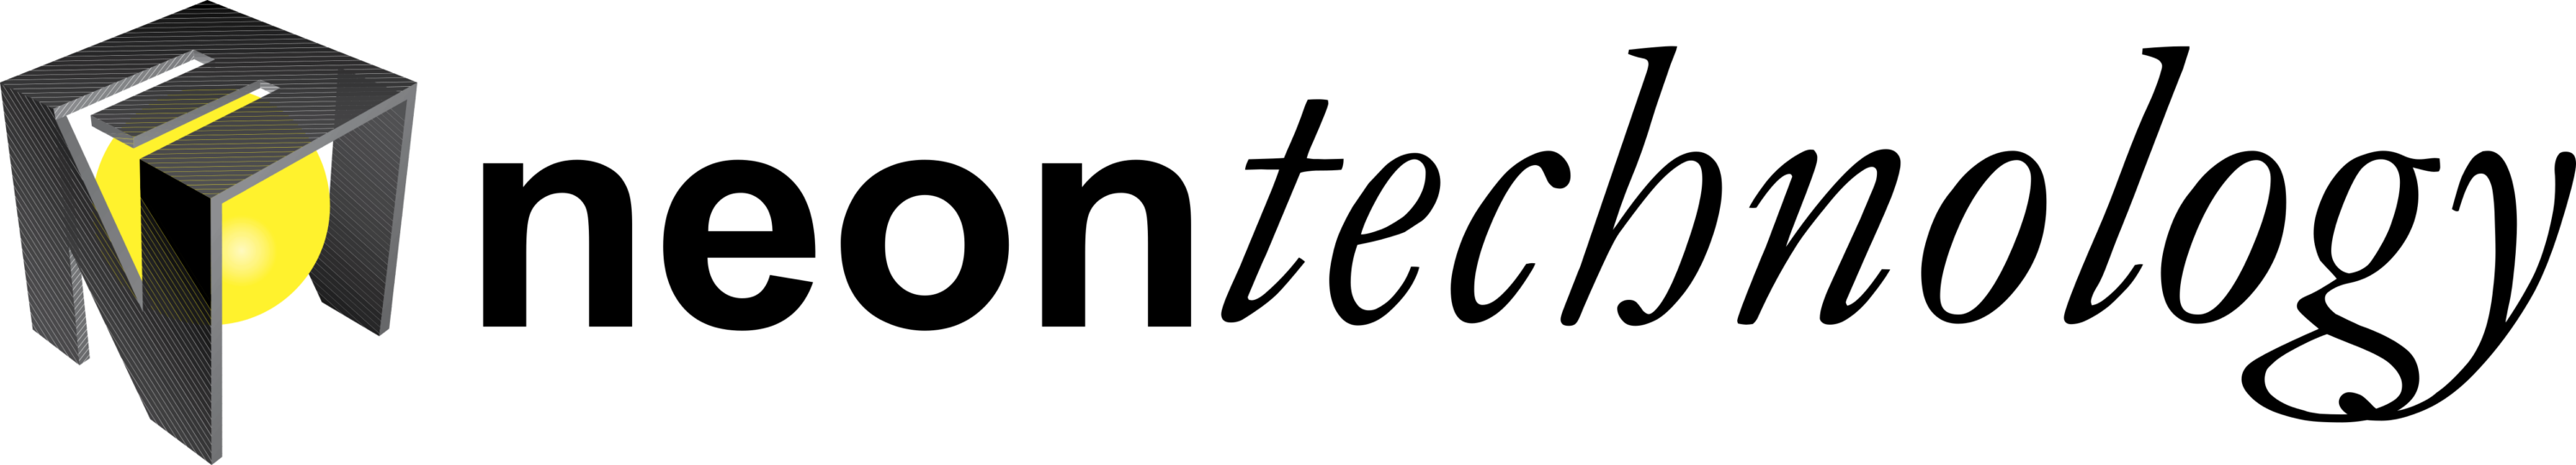 Neon Technology Logo